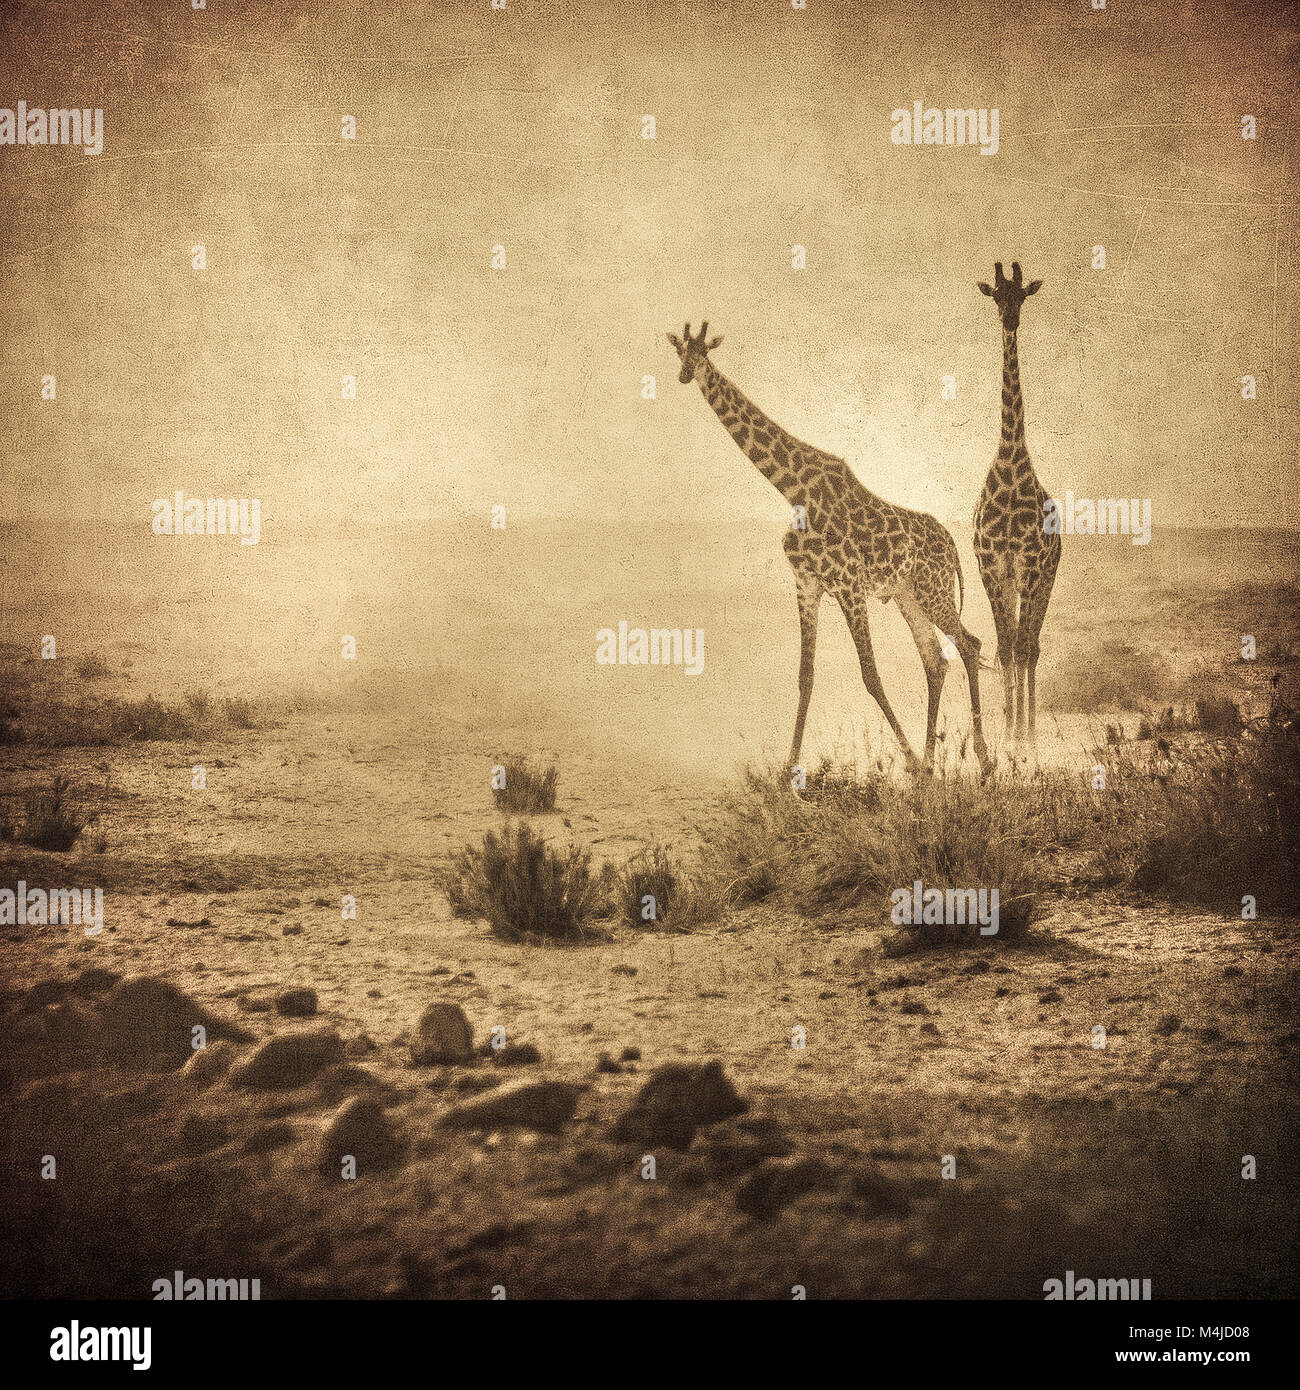 vintage image of giraffes in amboseli national park, kenya Stock Photo